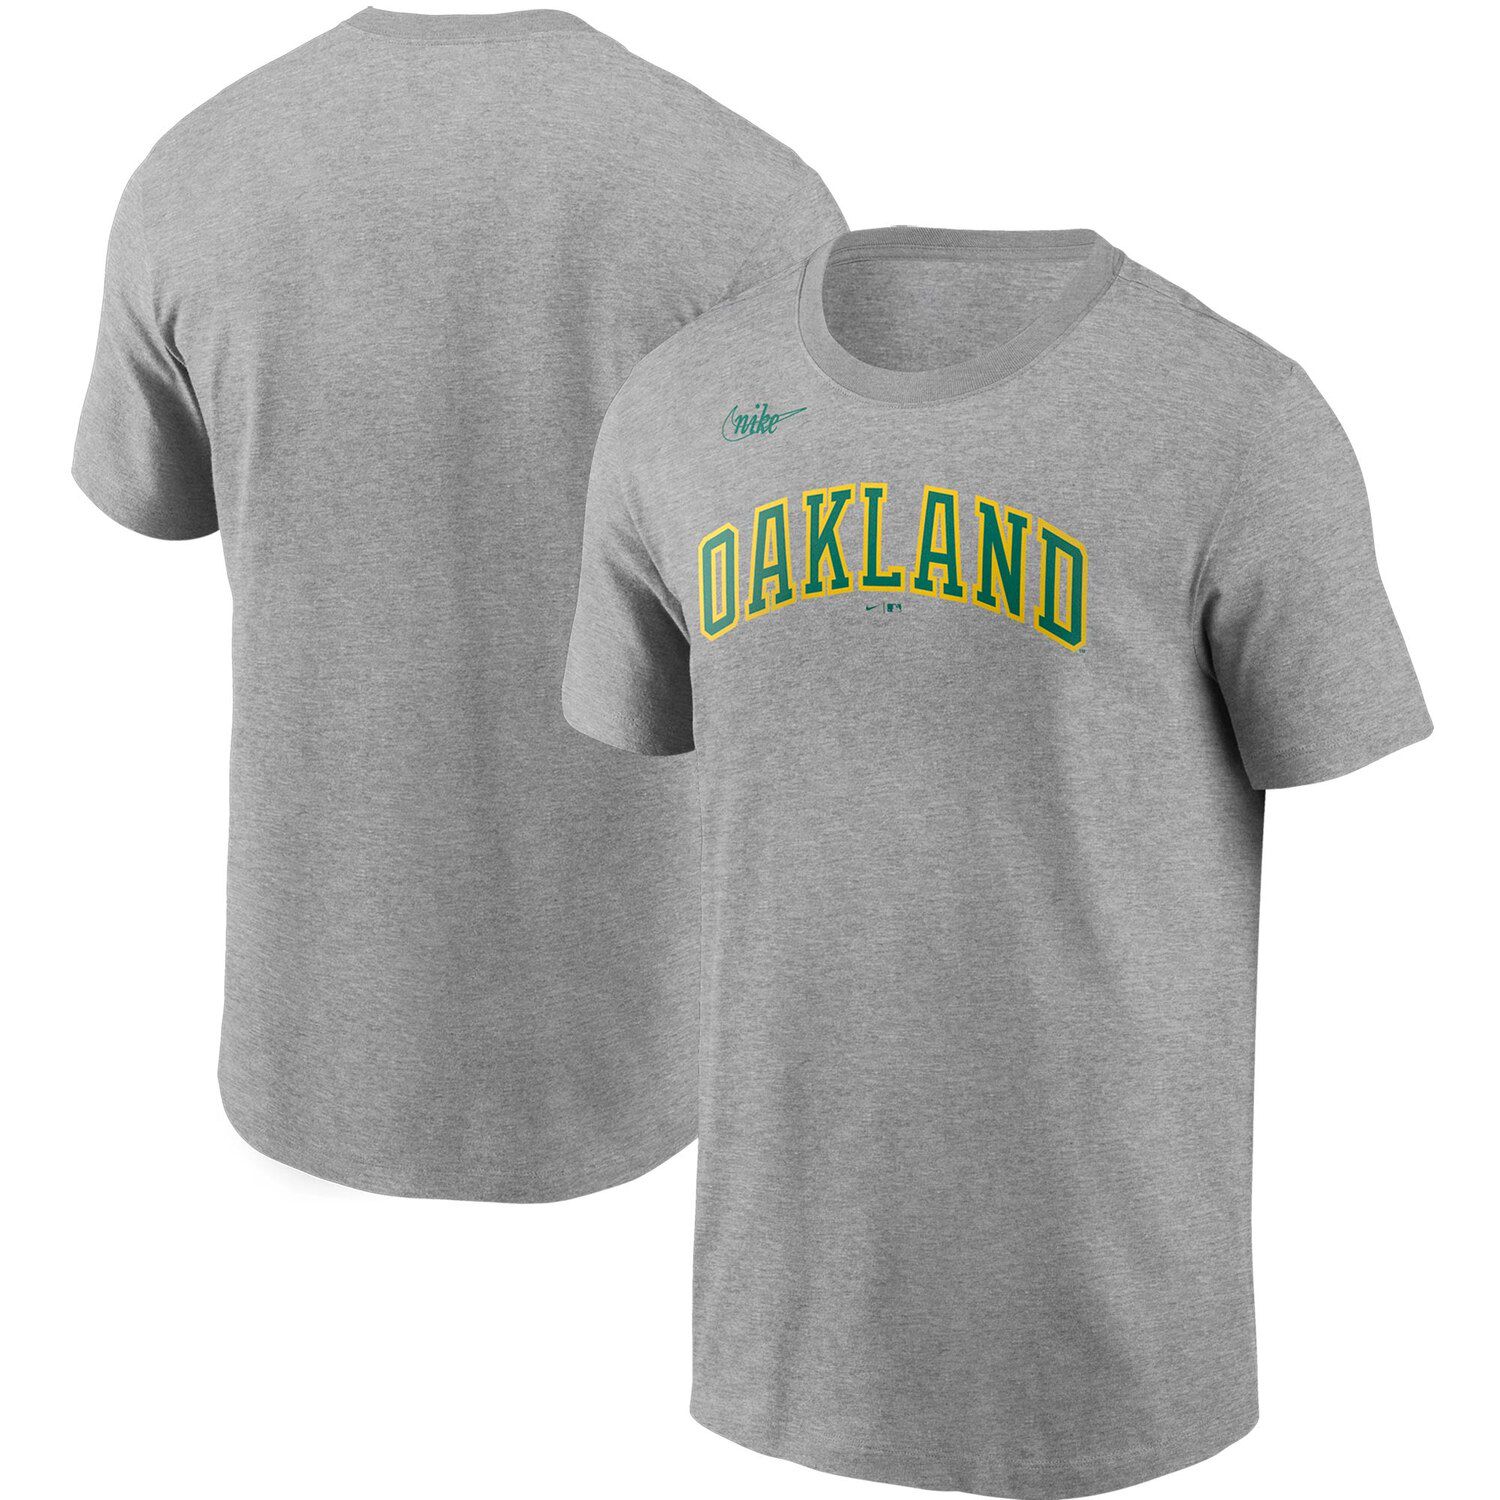 oakland a's tee shirts